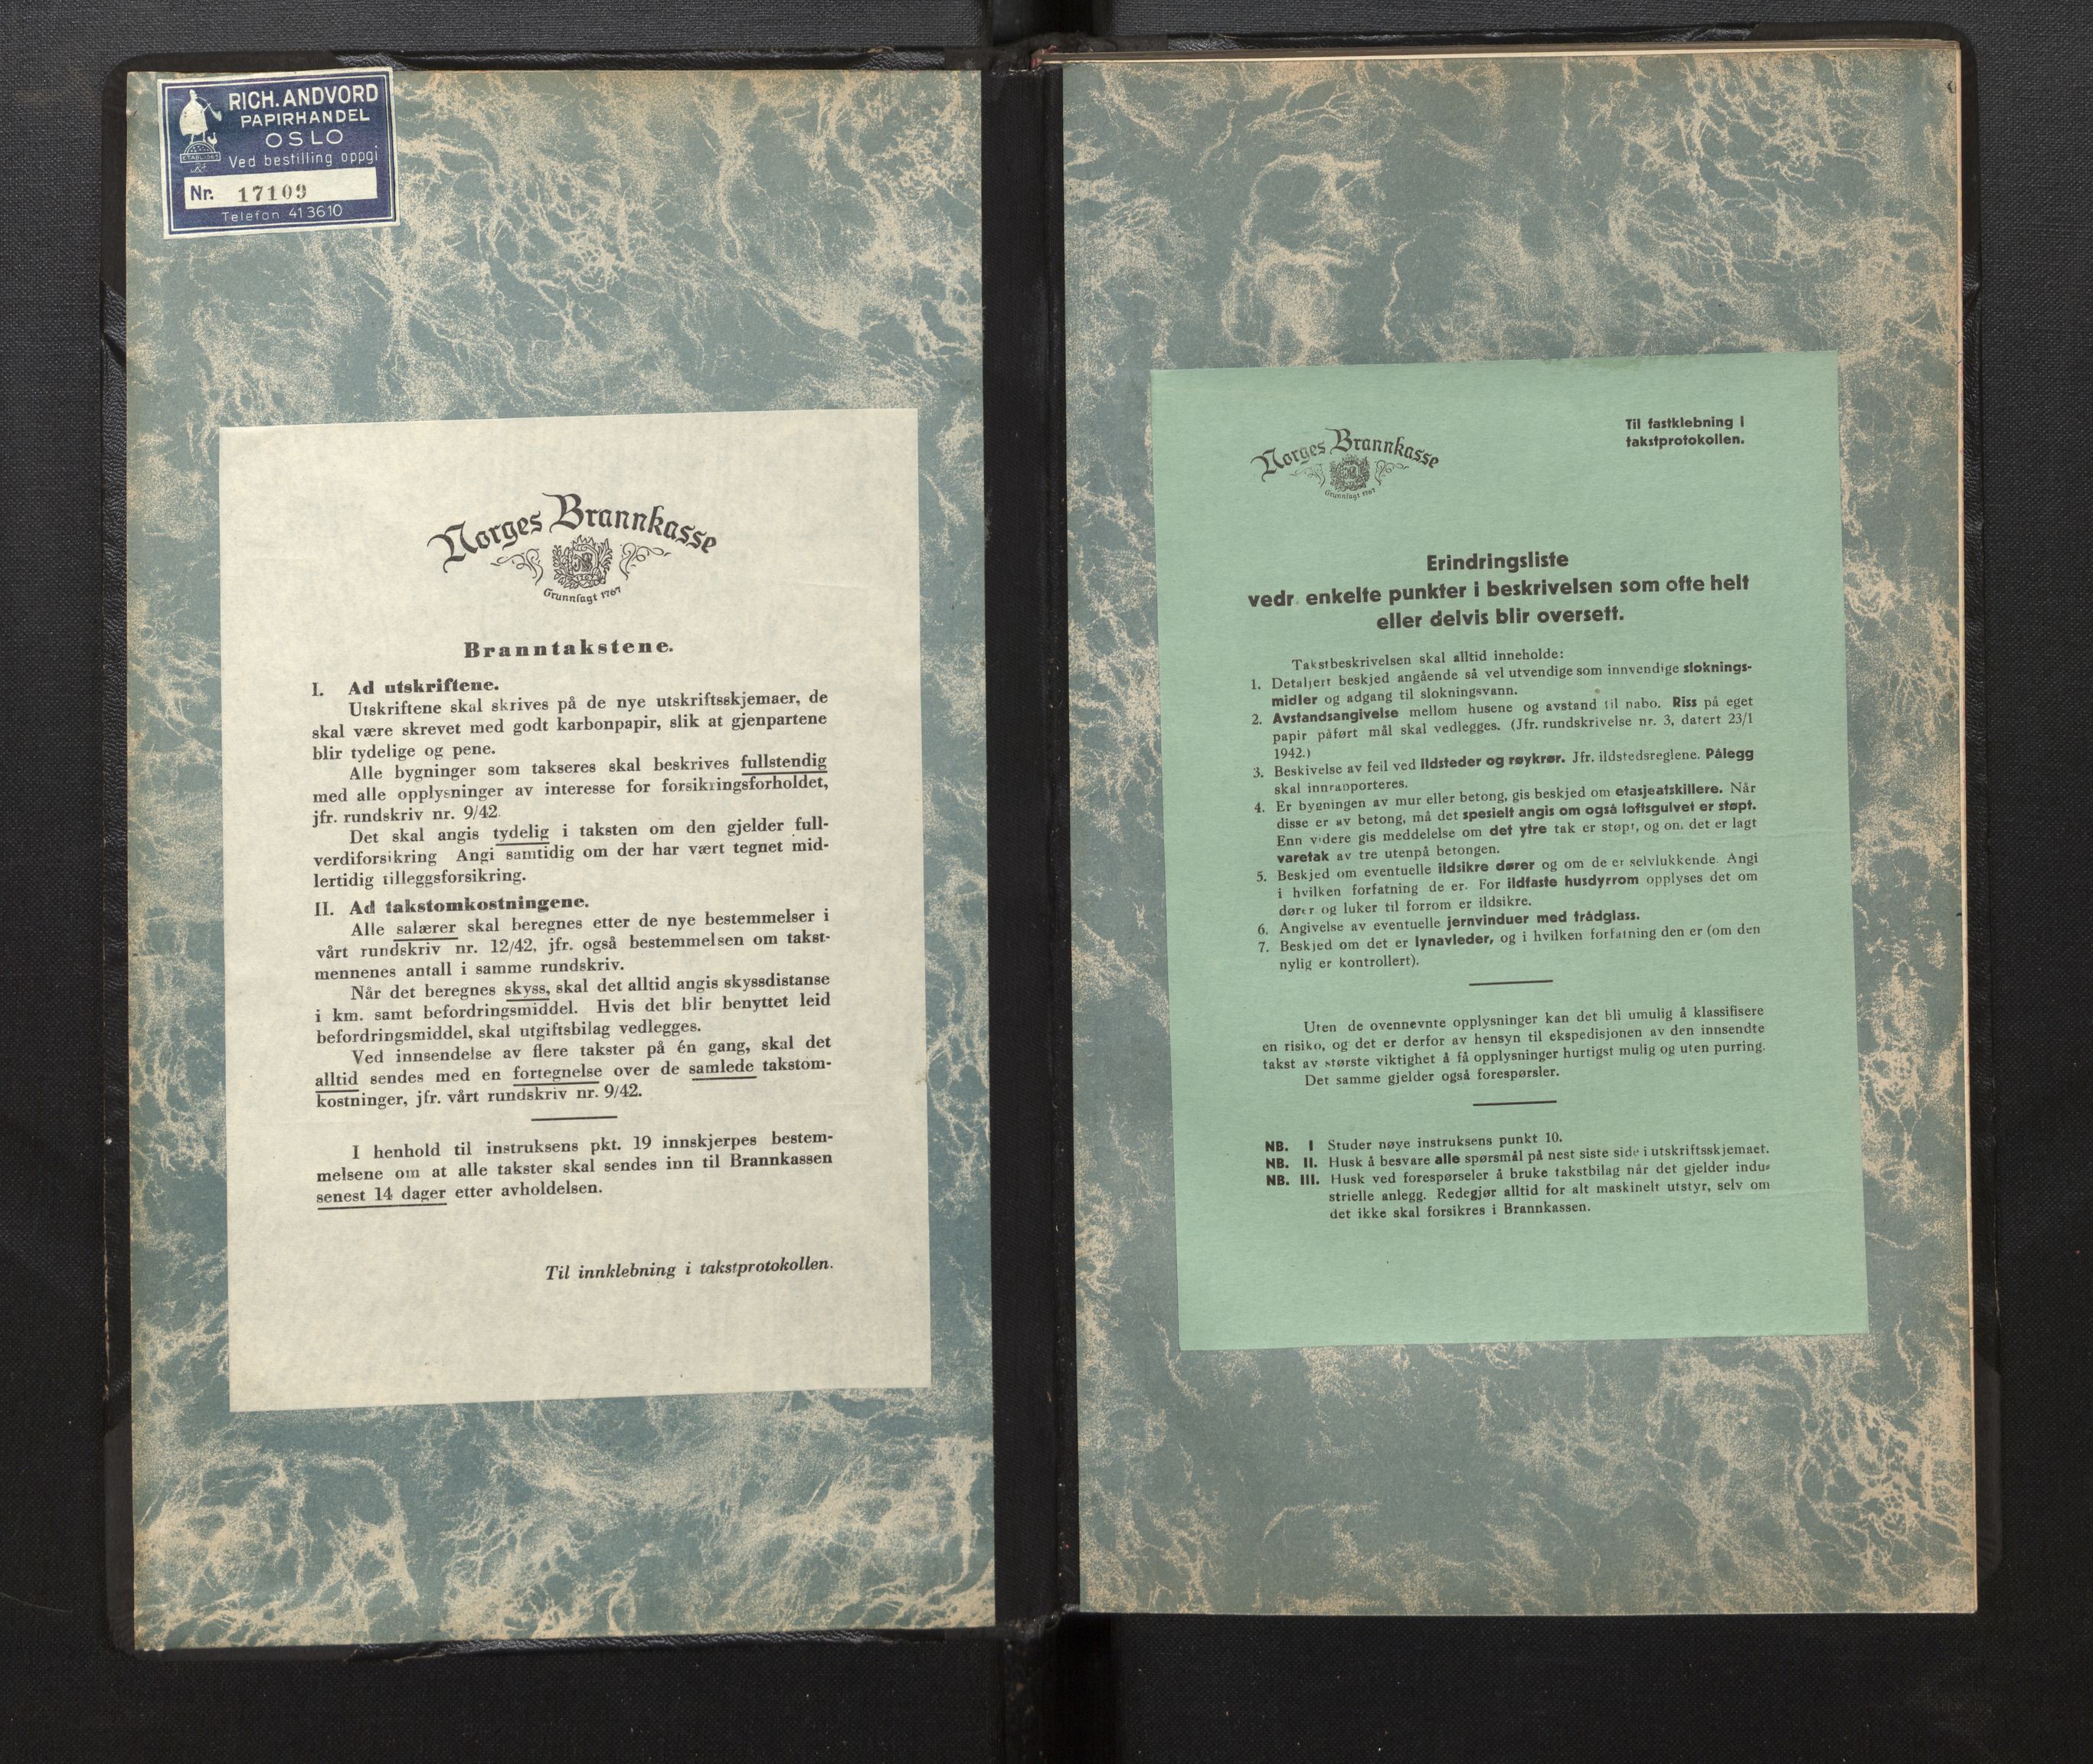 Lensmannen i Solund, SAB/A-30001/0012/L0001b: Branntakstprotokoll, 1951-1955